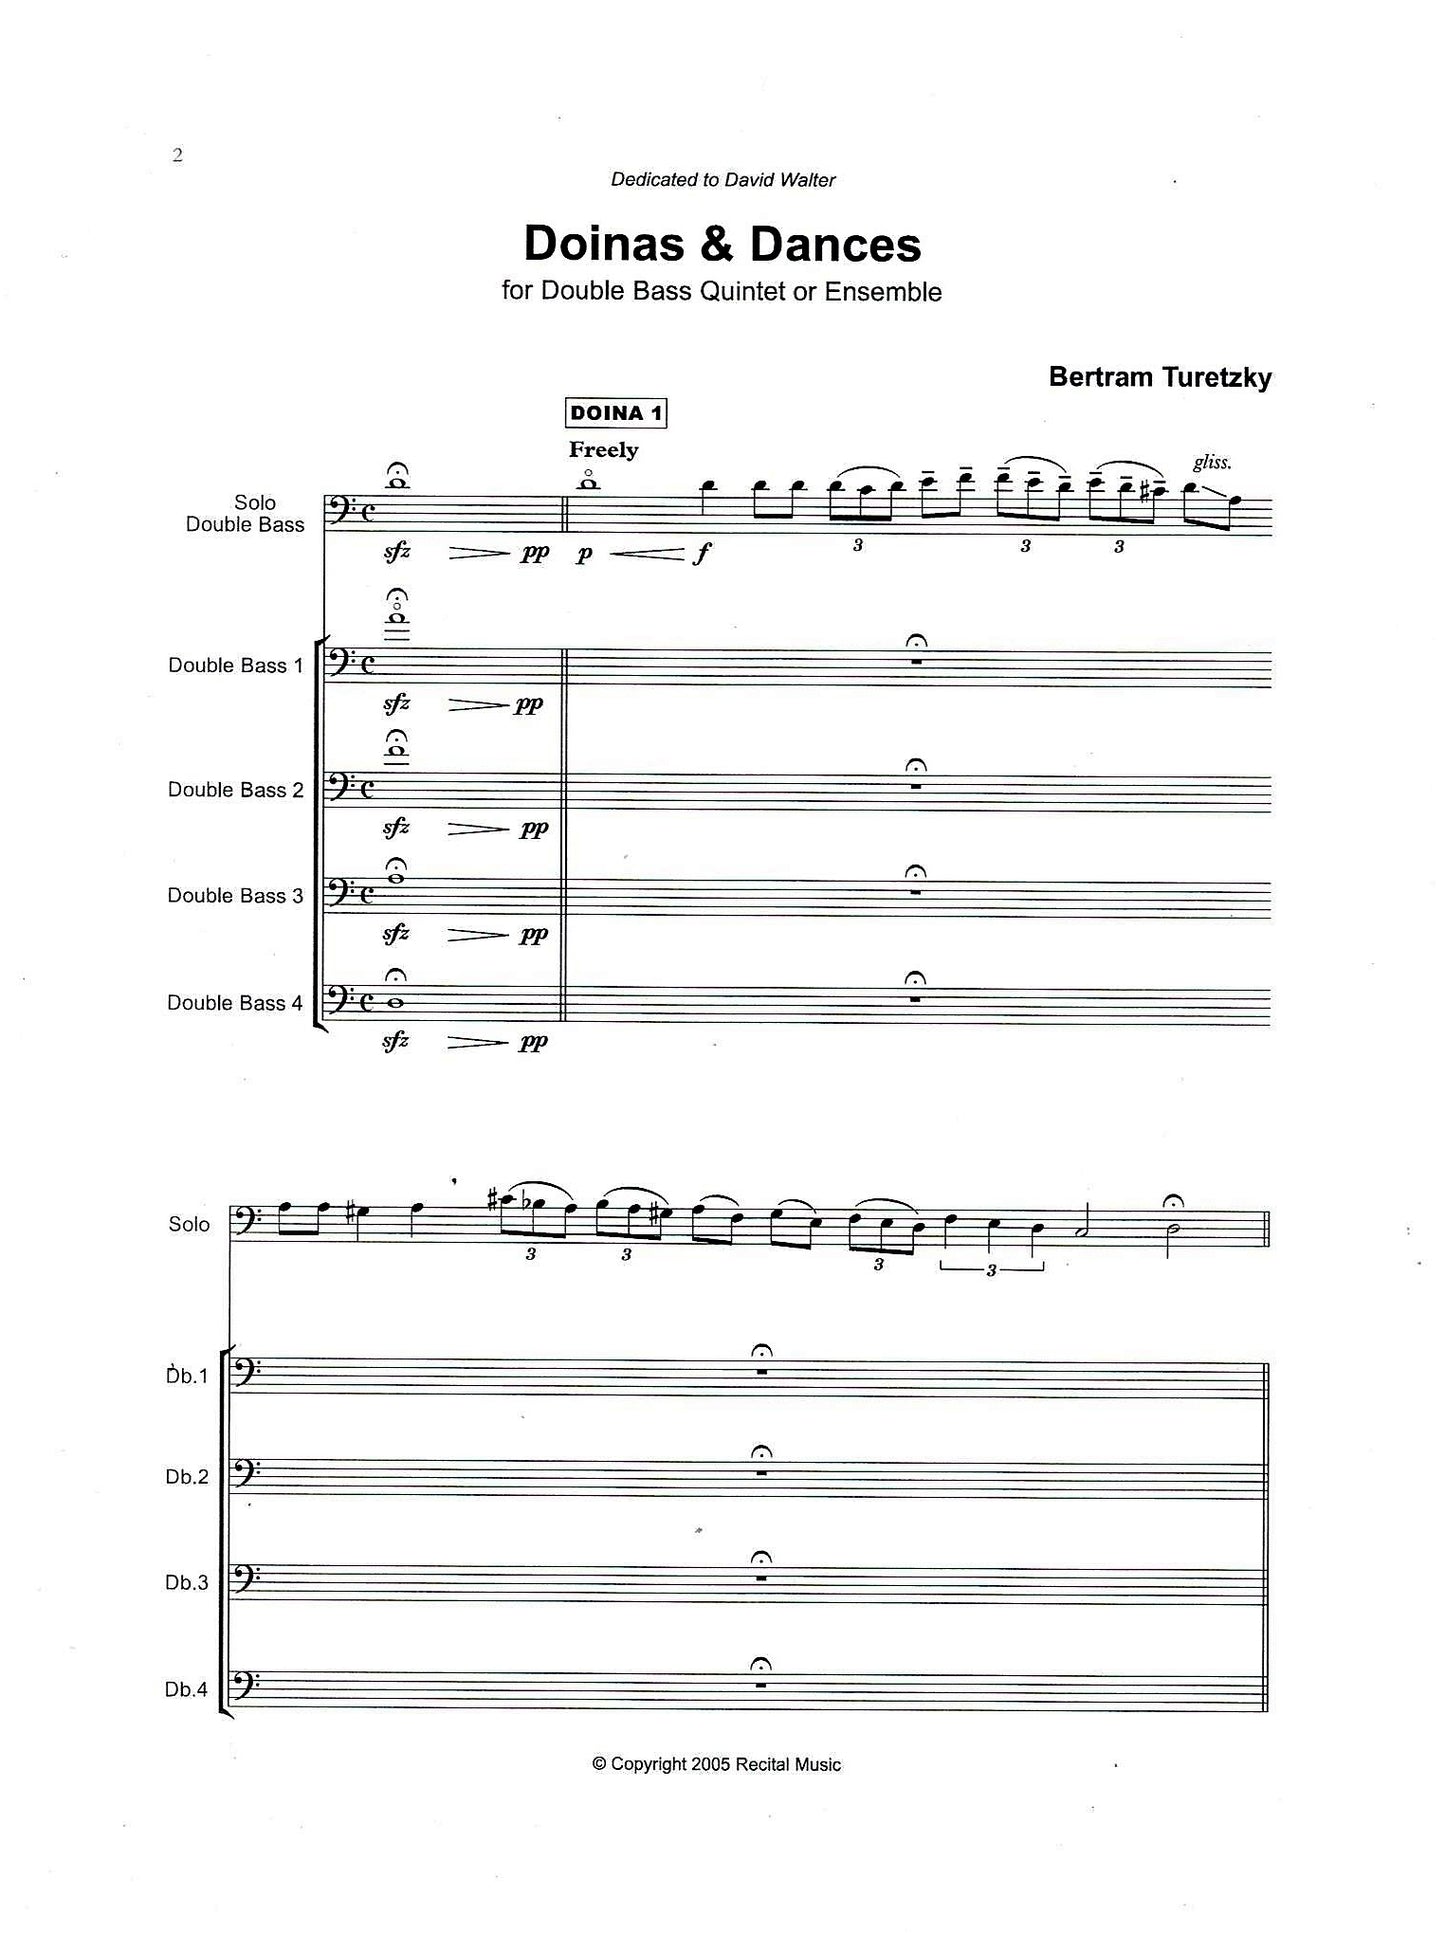 Bertram Turetzky: Doinas & Dances for 4, 5 or more double basses